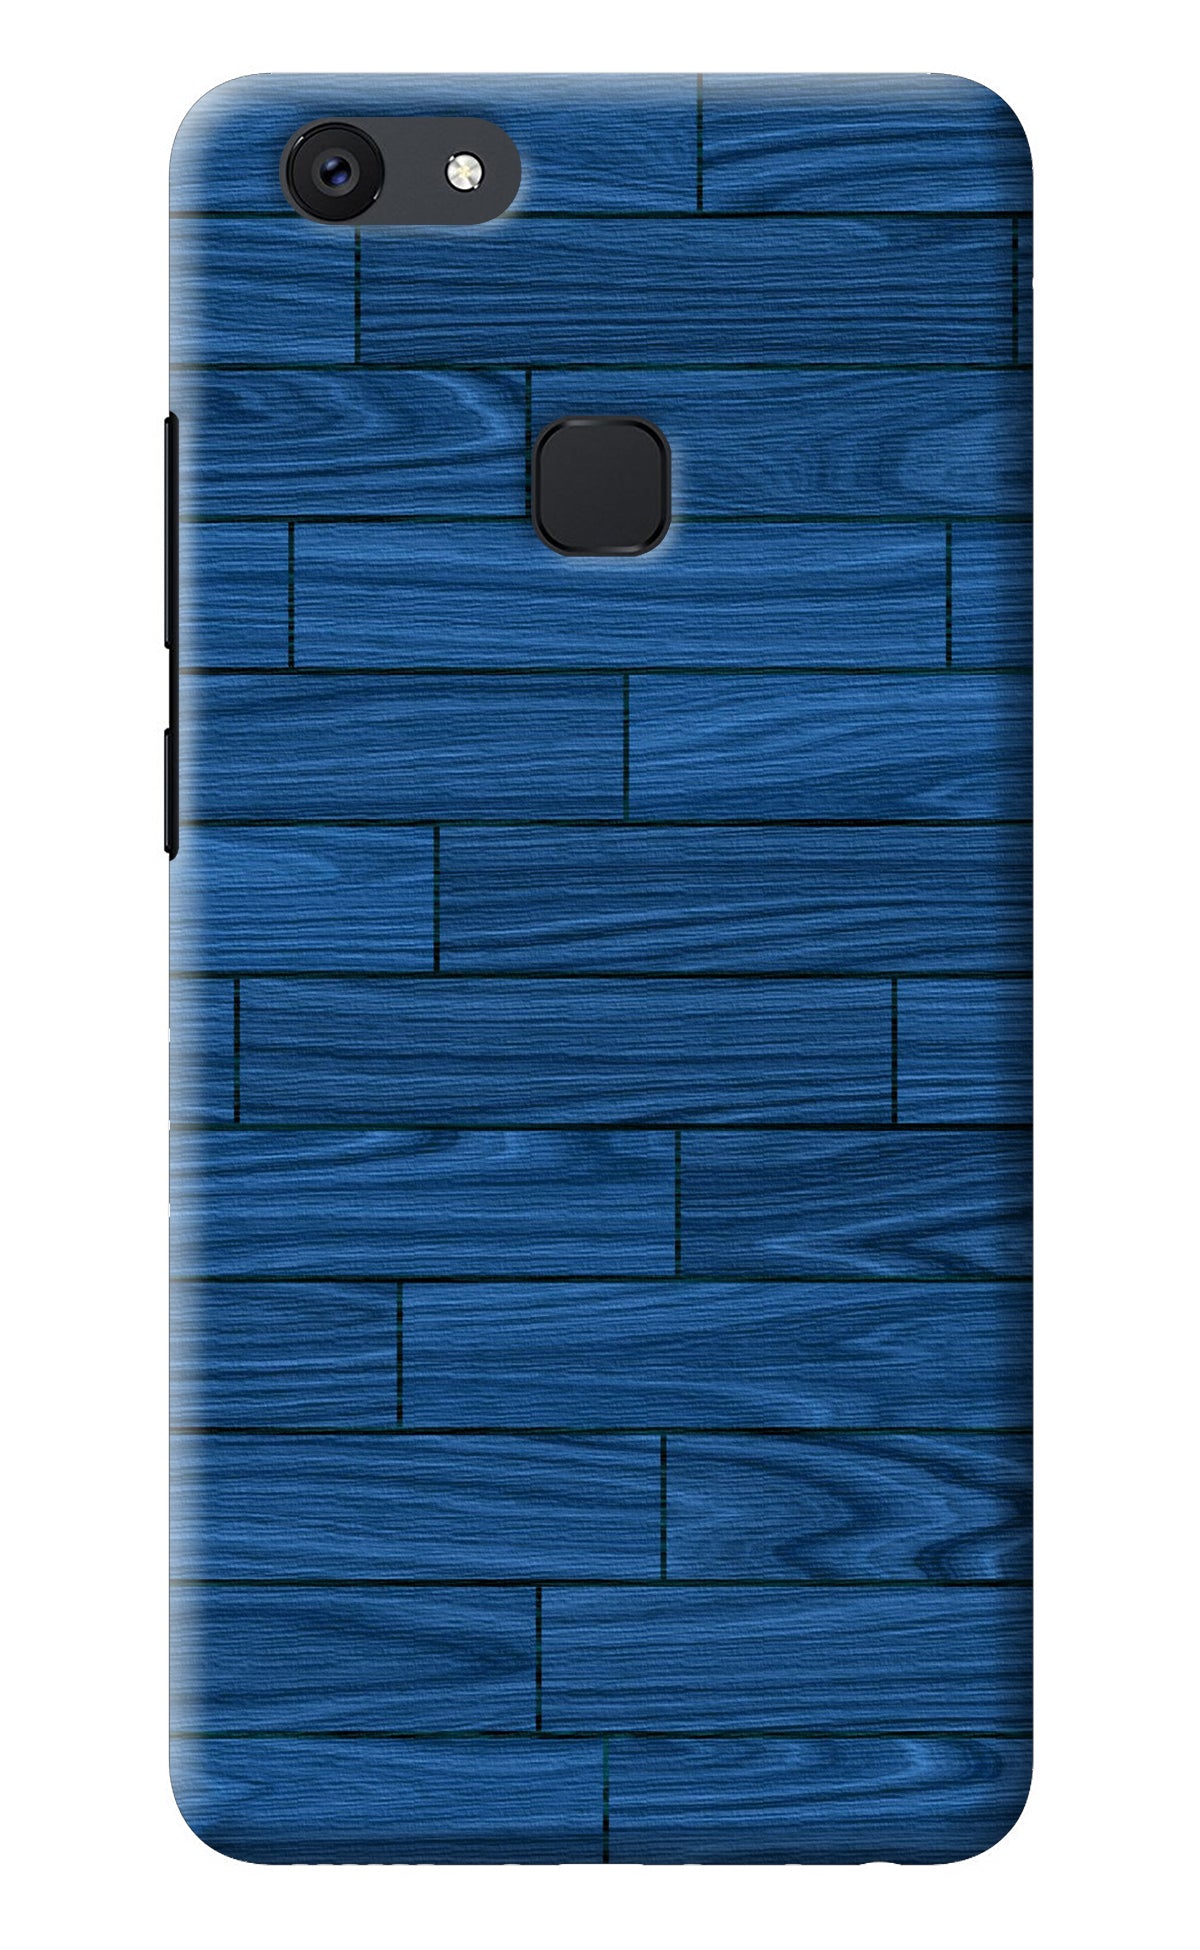 Wooden Texture Vivo V7 plus Back Cover